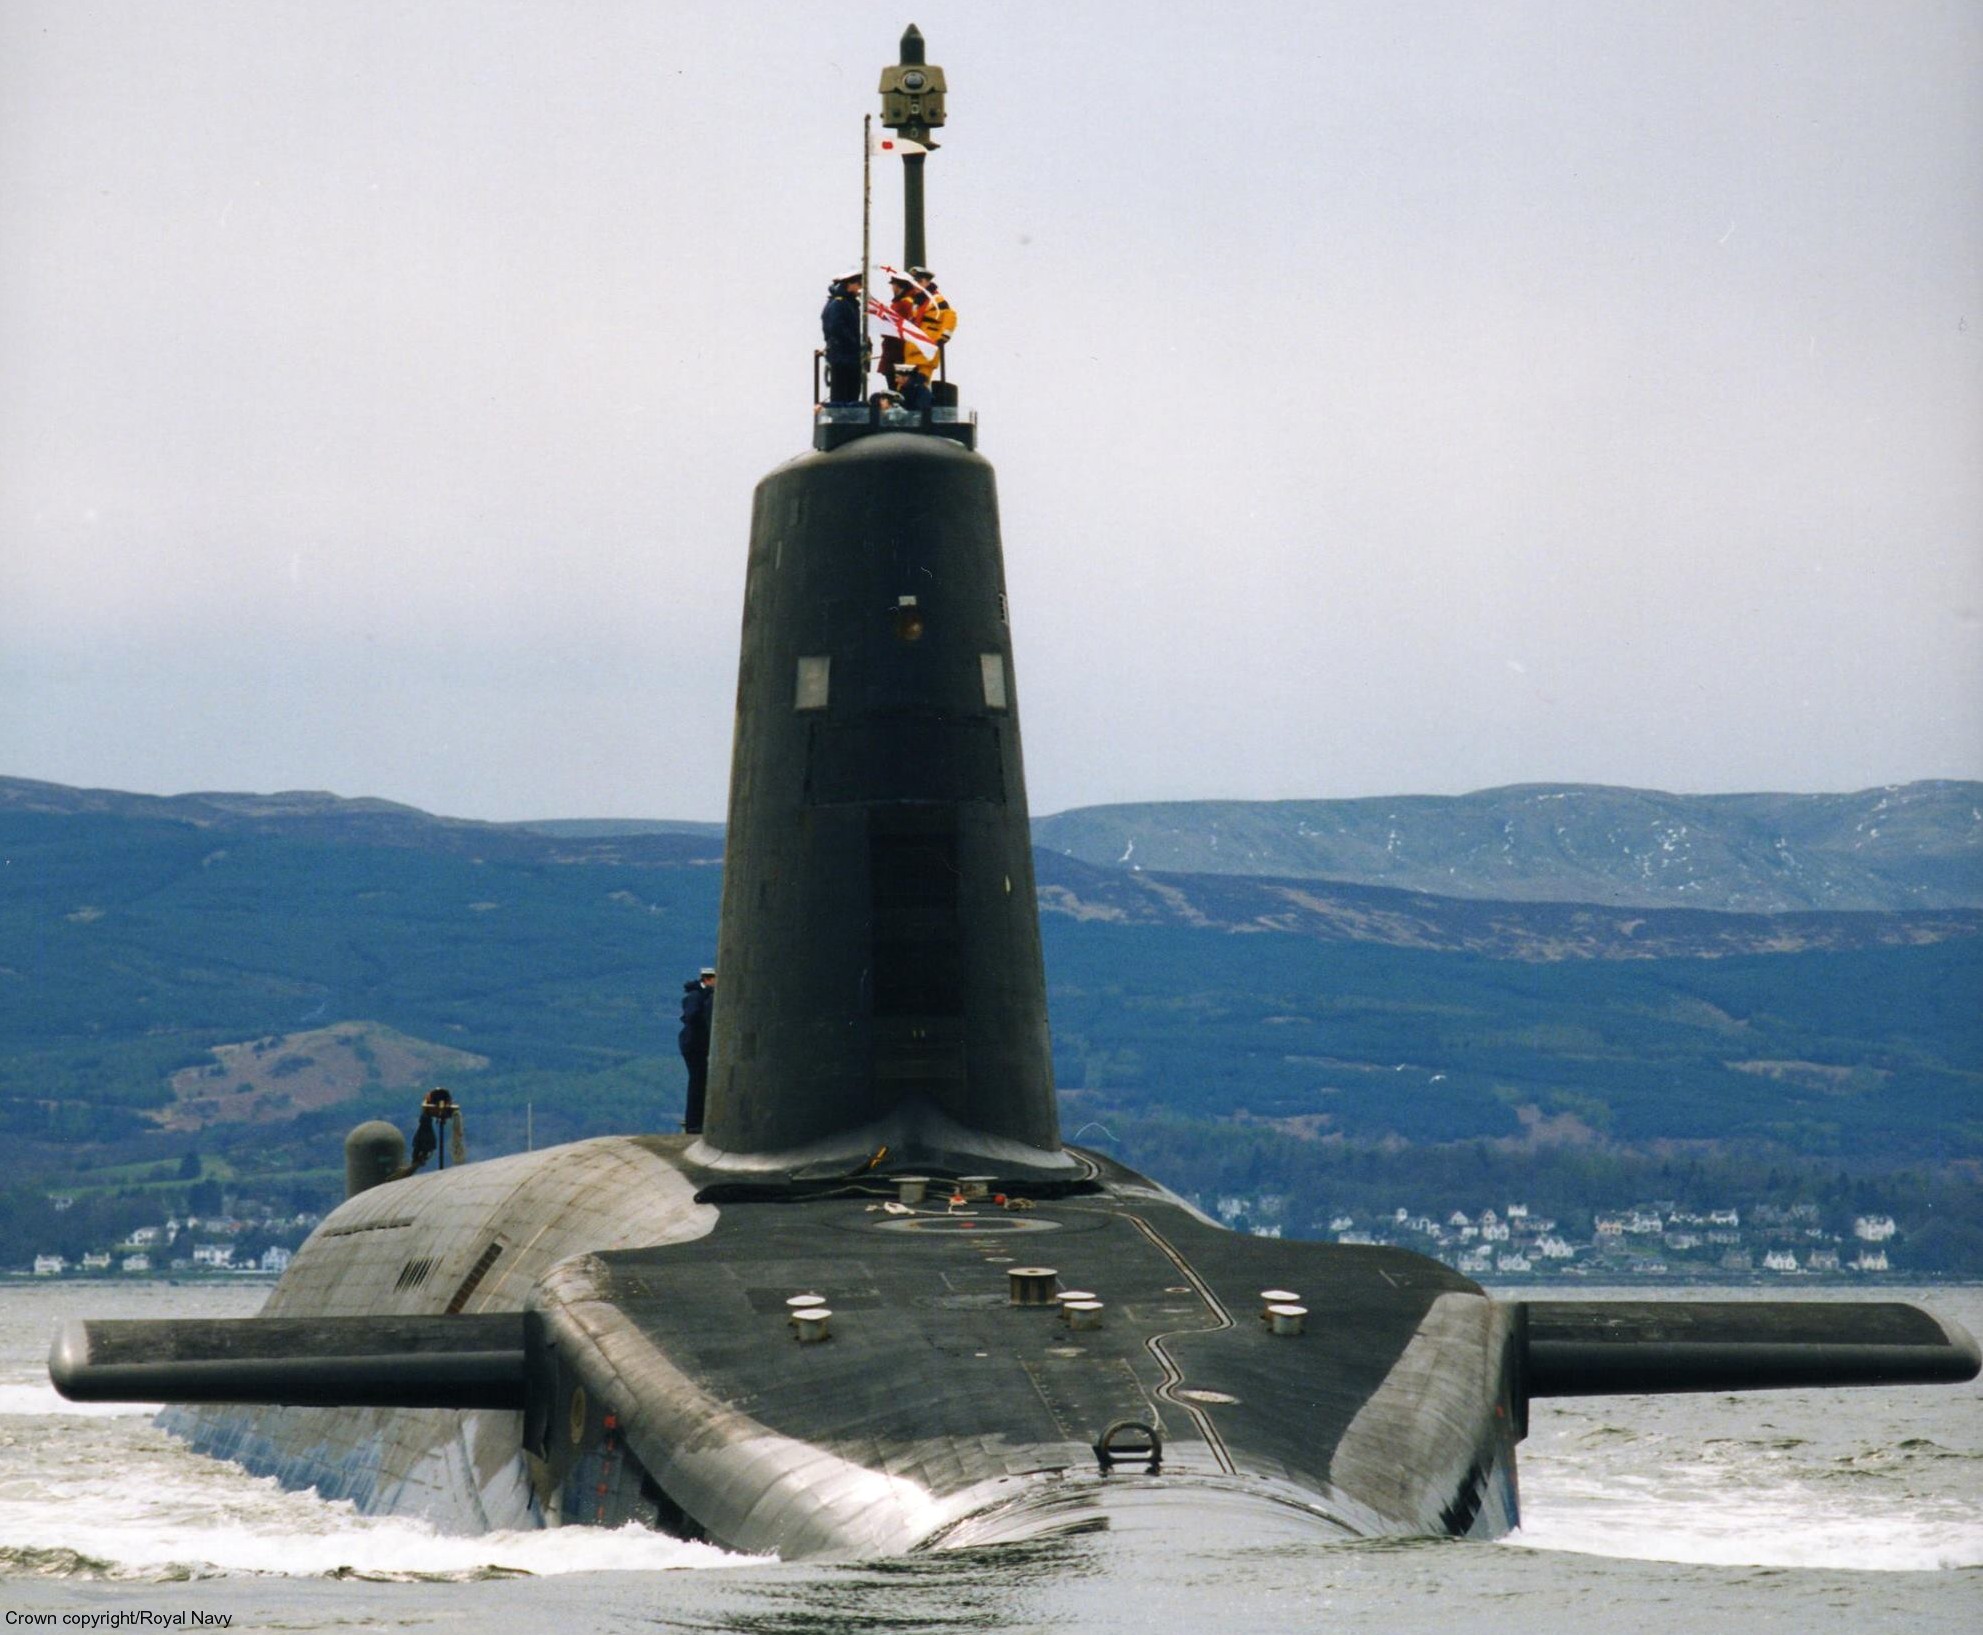 s29 hms victorious ssbn vanguard class ballistic missile submarine trident slbm royal navy 15